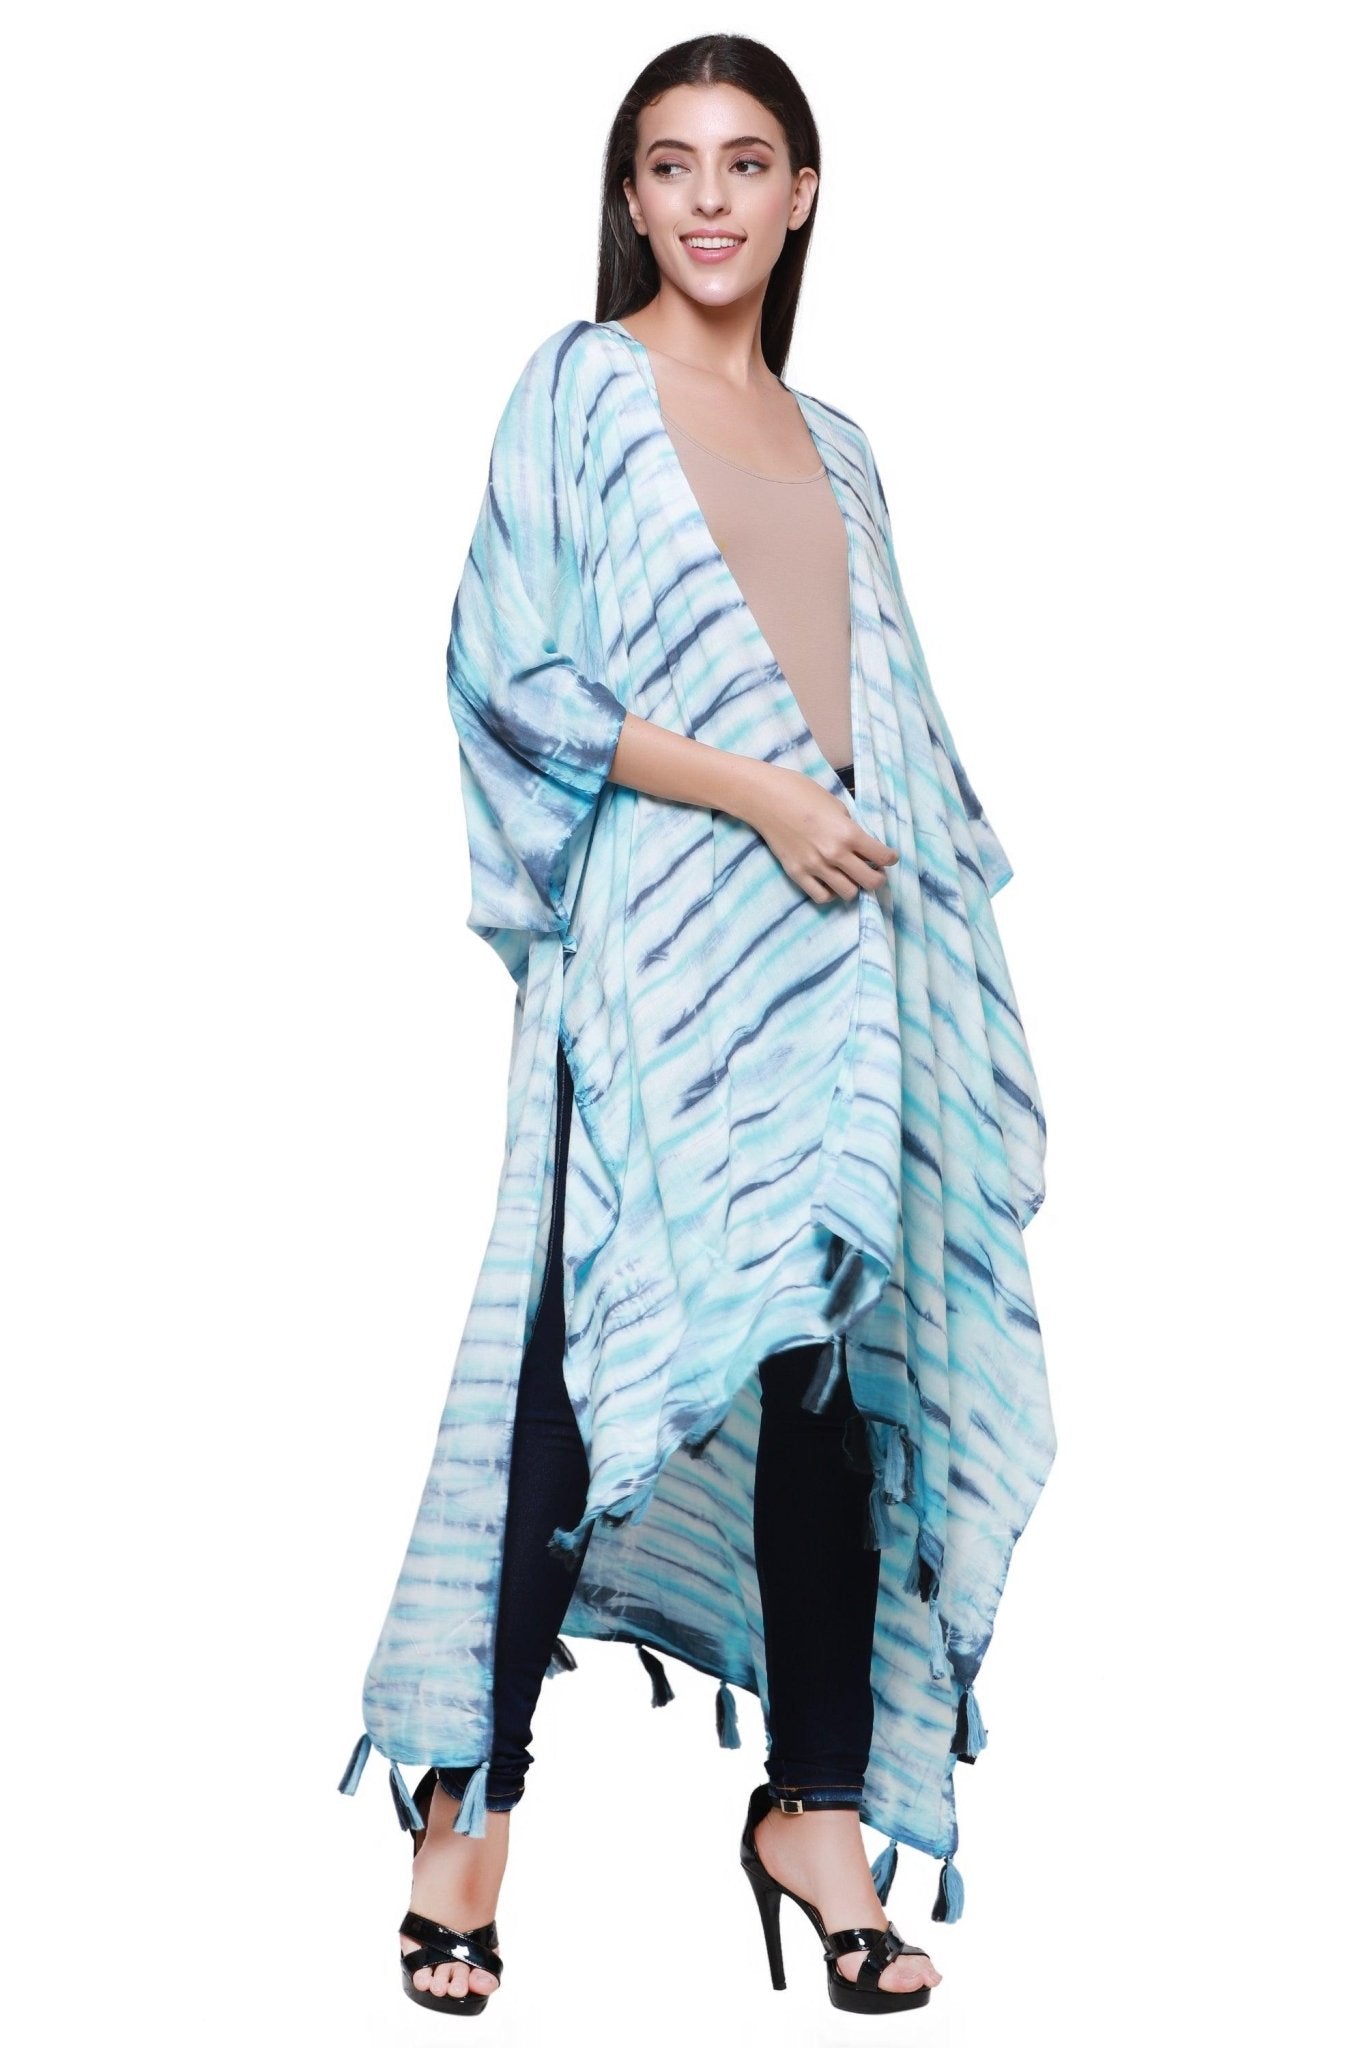 Zebra Tie Dye Beach Cover Up Kimono 22031 - Advance Apparels Inc